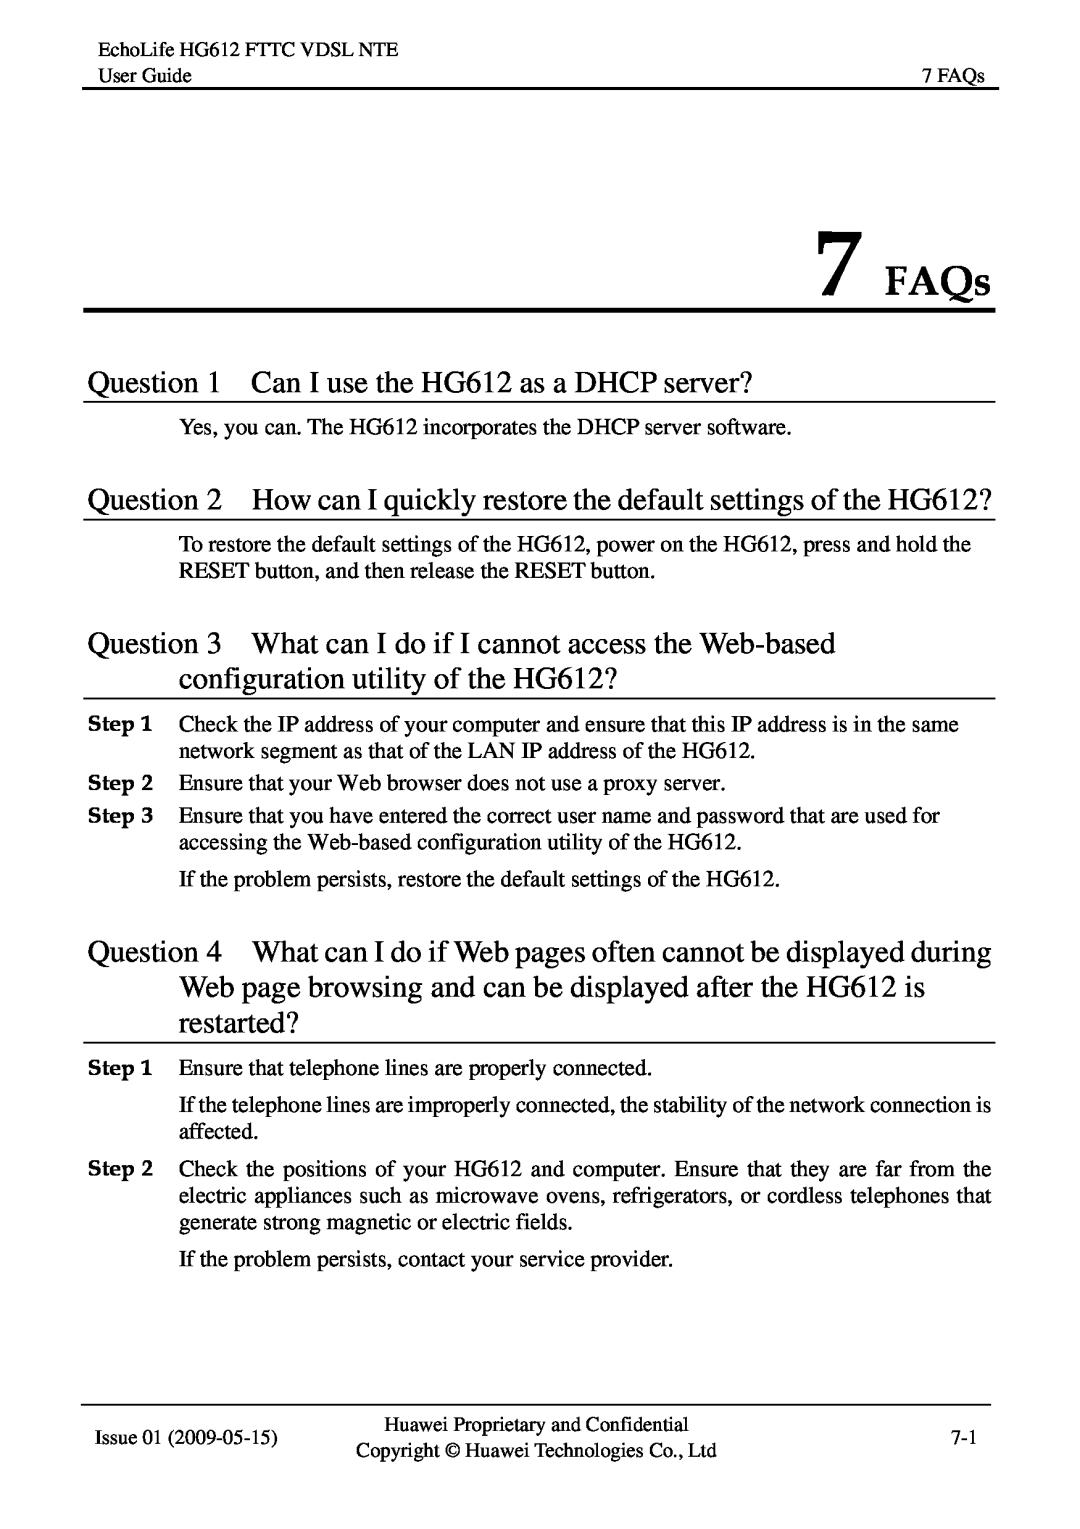 Huawei HG612FTTC VDSL NTE manual FAQs 